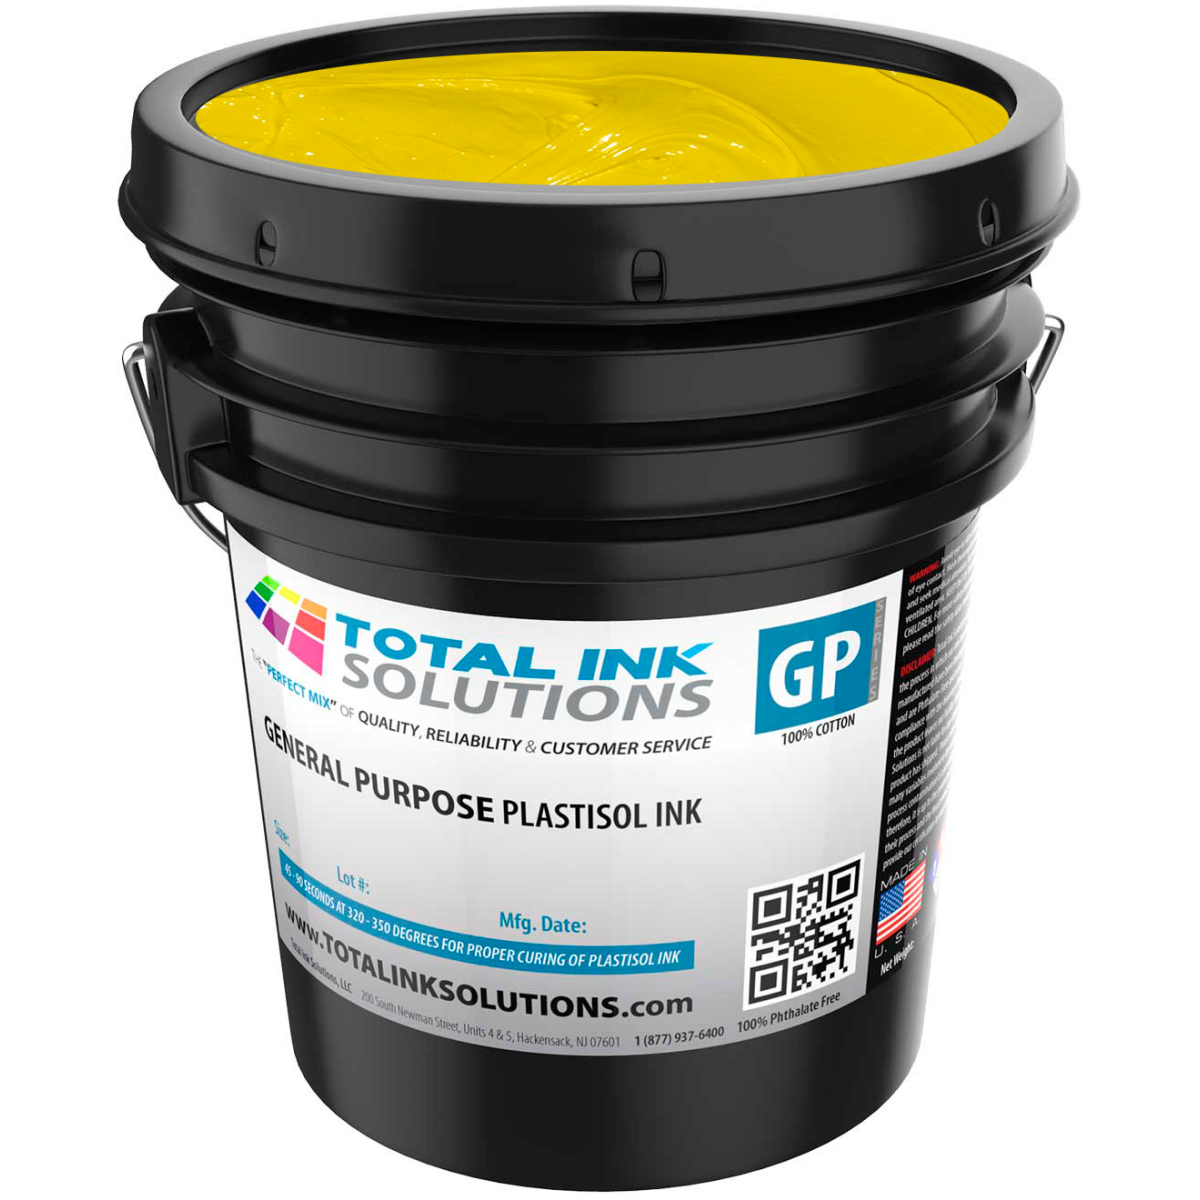 General Purpose Plastisol Ink - 5 Gallon TOTAL INK SOLUTIONS®